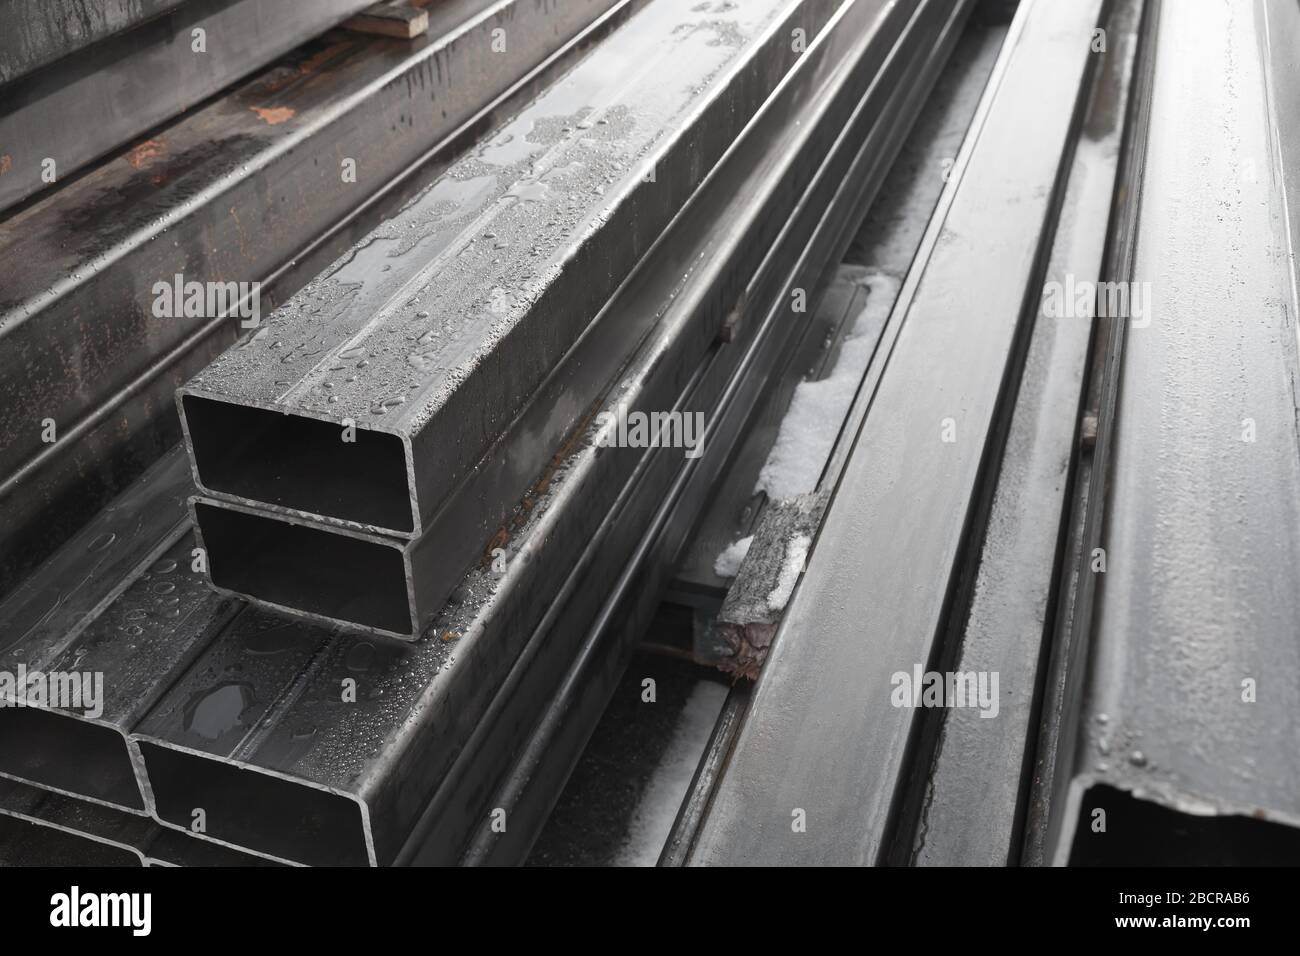 Stapel gewalzter Metallprodukte, graue Stahlrohre mit rechteckigem Querschnitt, Nahaufnahme mit selektivem Weichfokus Stockfoto